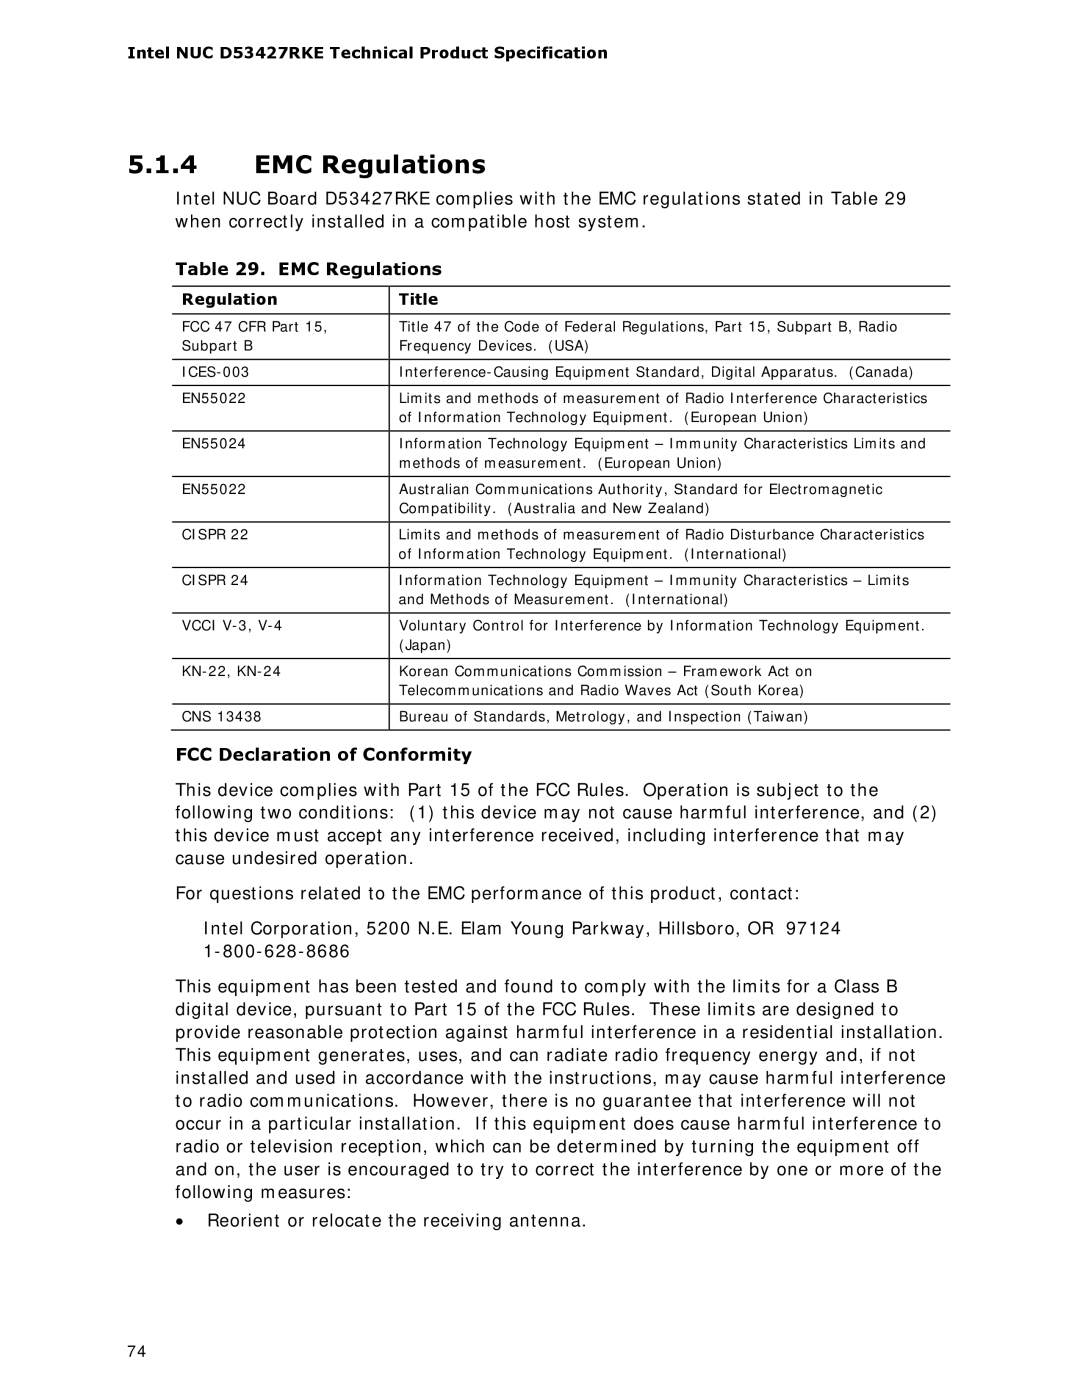 Intel BOXDC53427HYE specifications EMC Regulations, FCC Declaration of Conformity, Regulation Title 